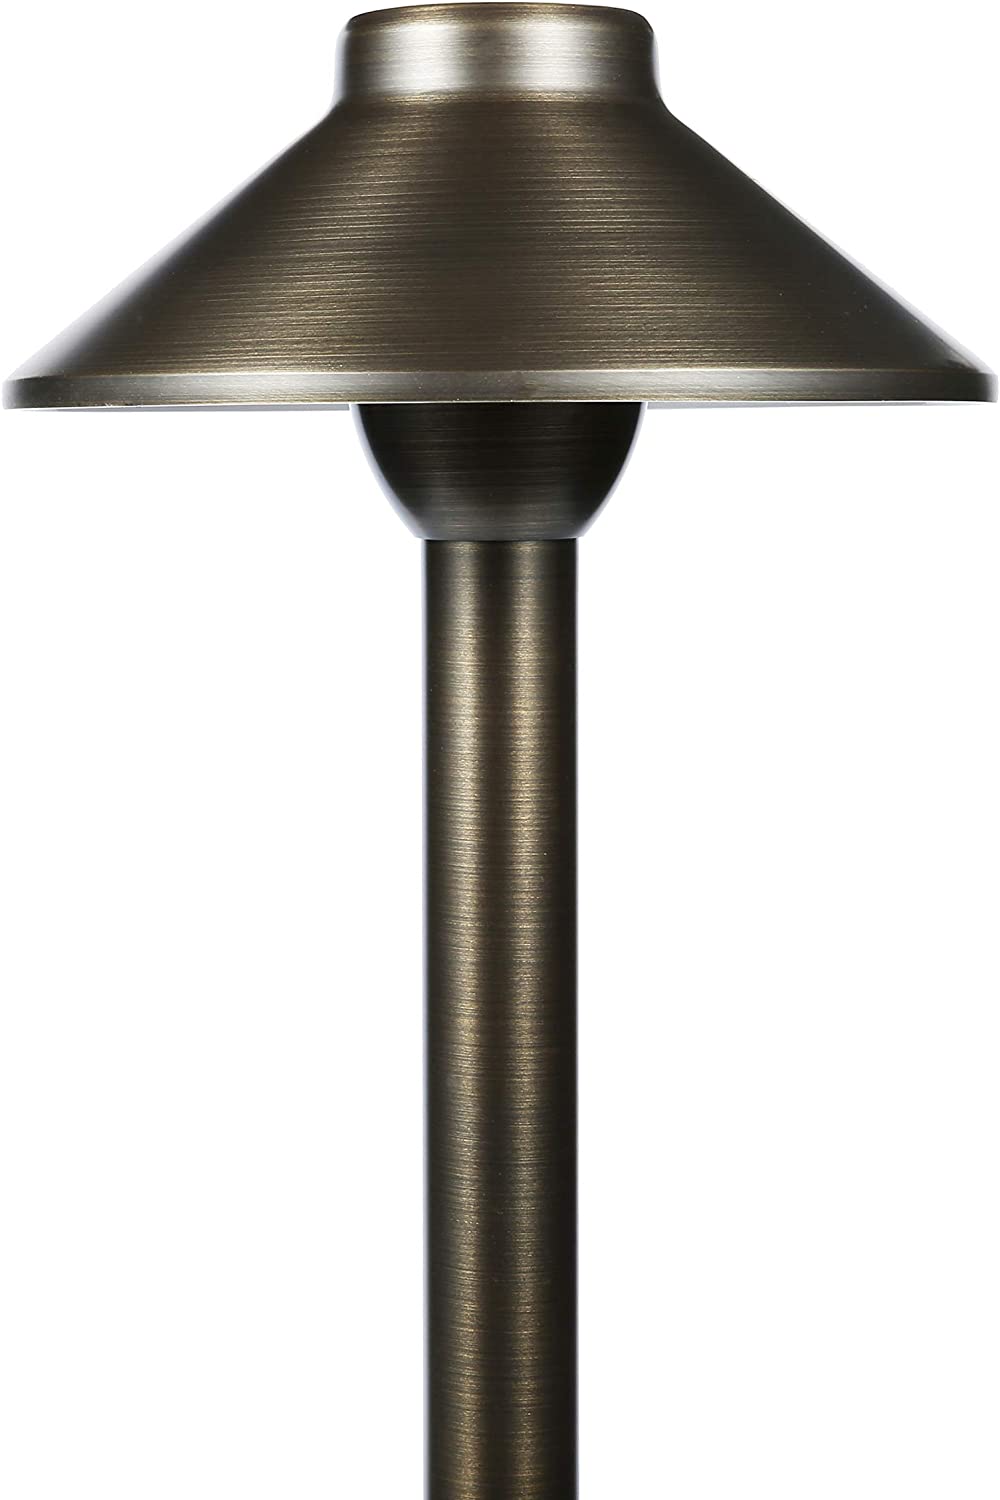 LED Outdoor low voltage landscape lighting solid cast brass round